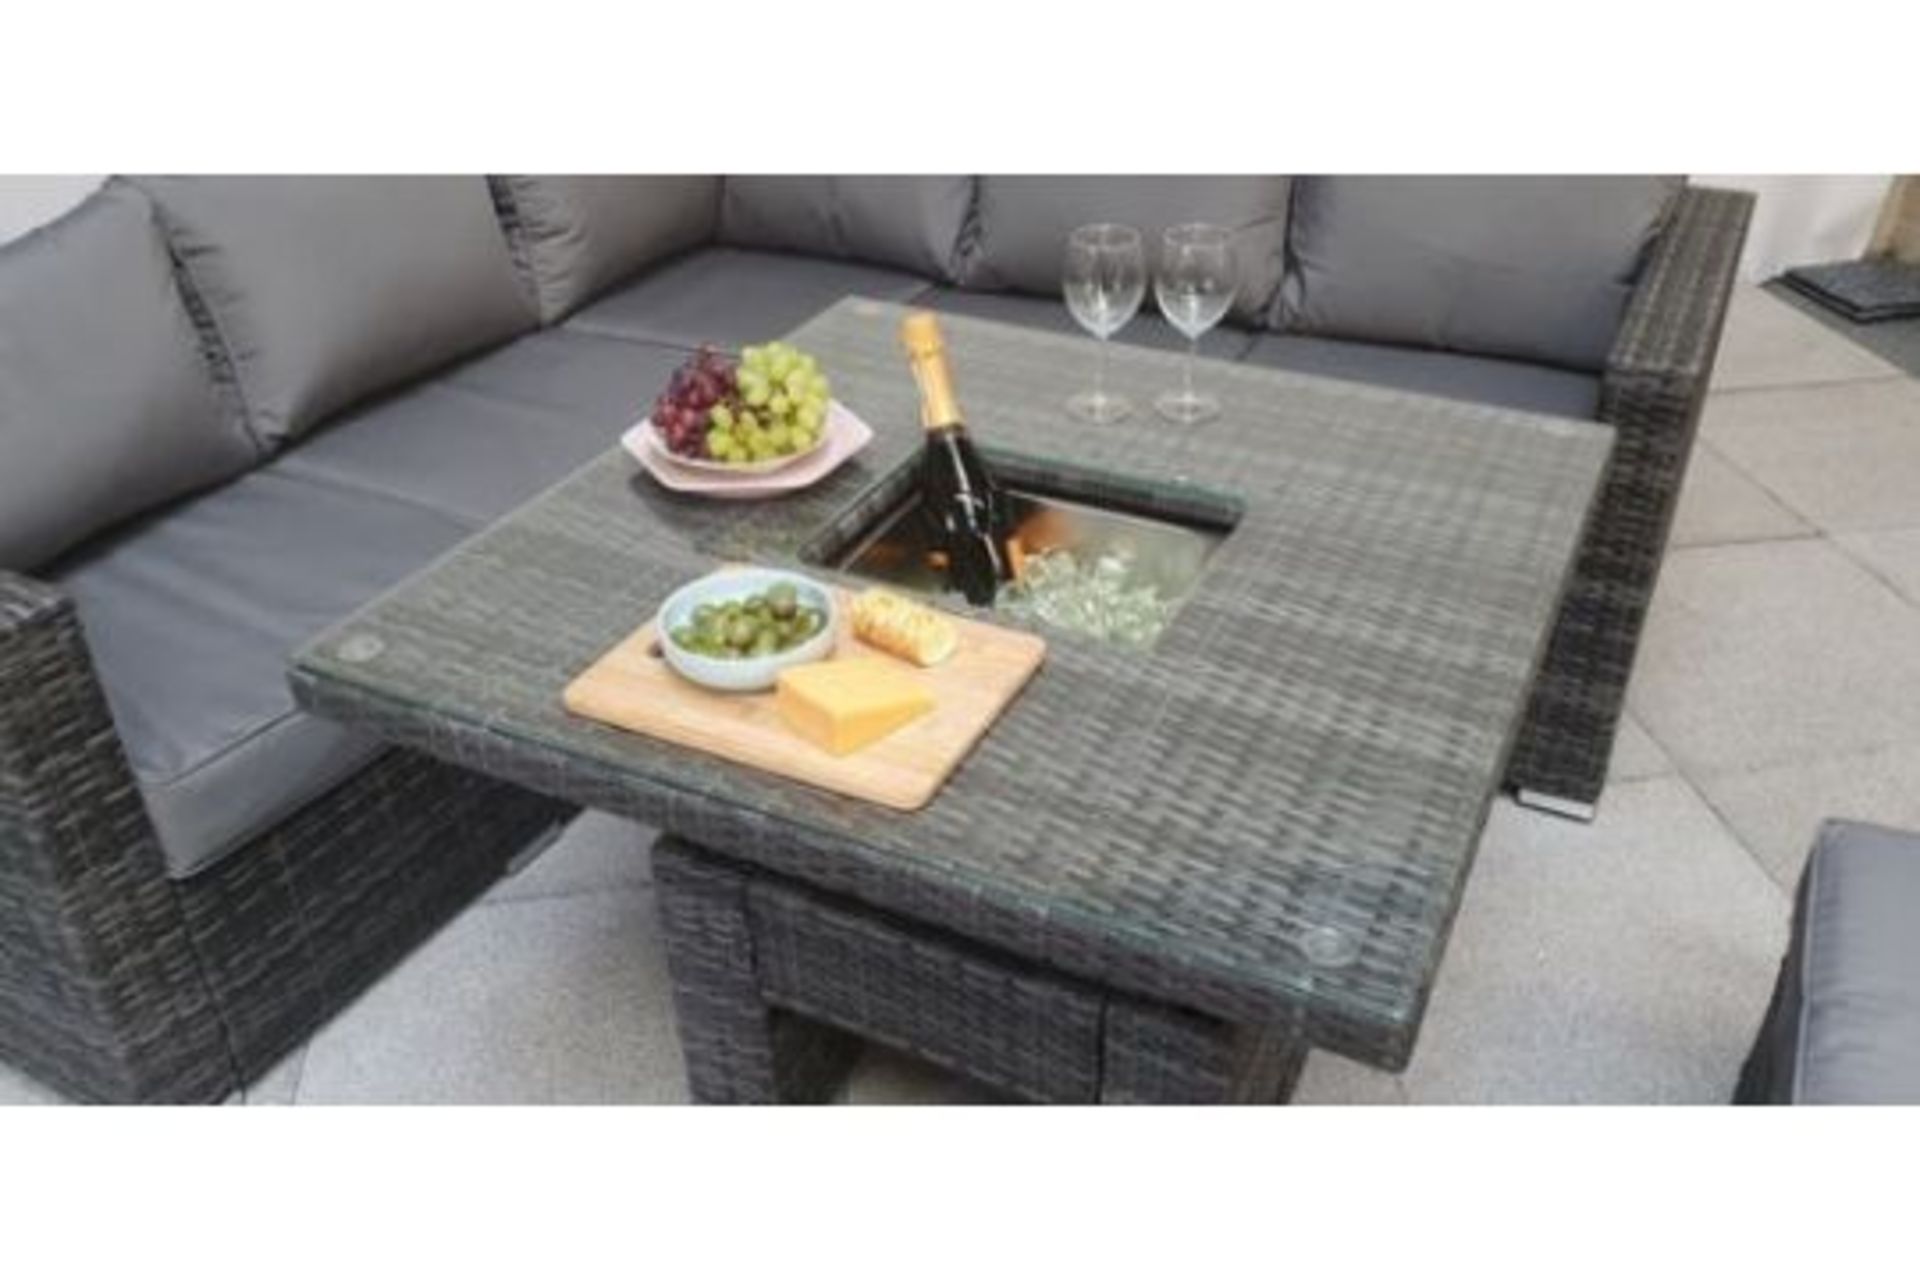 New & Boxed Luxury Signature Weave Georgia Corner Dining Set With Lift Table. RRP £1,999. Stylish